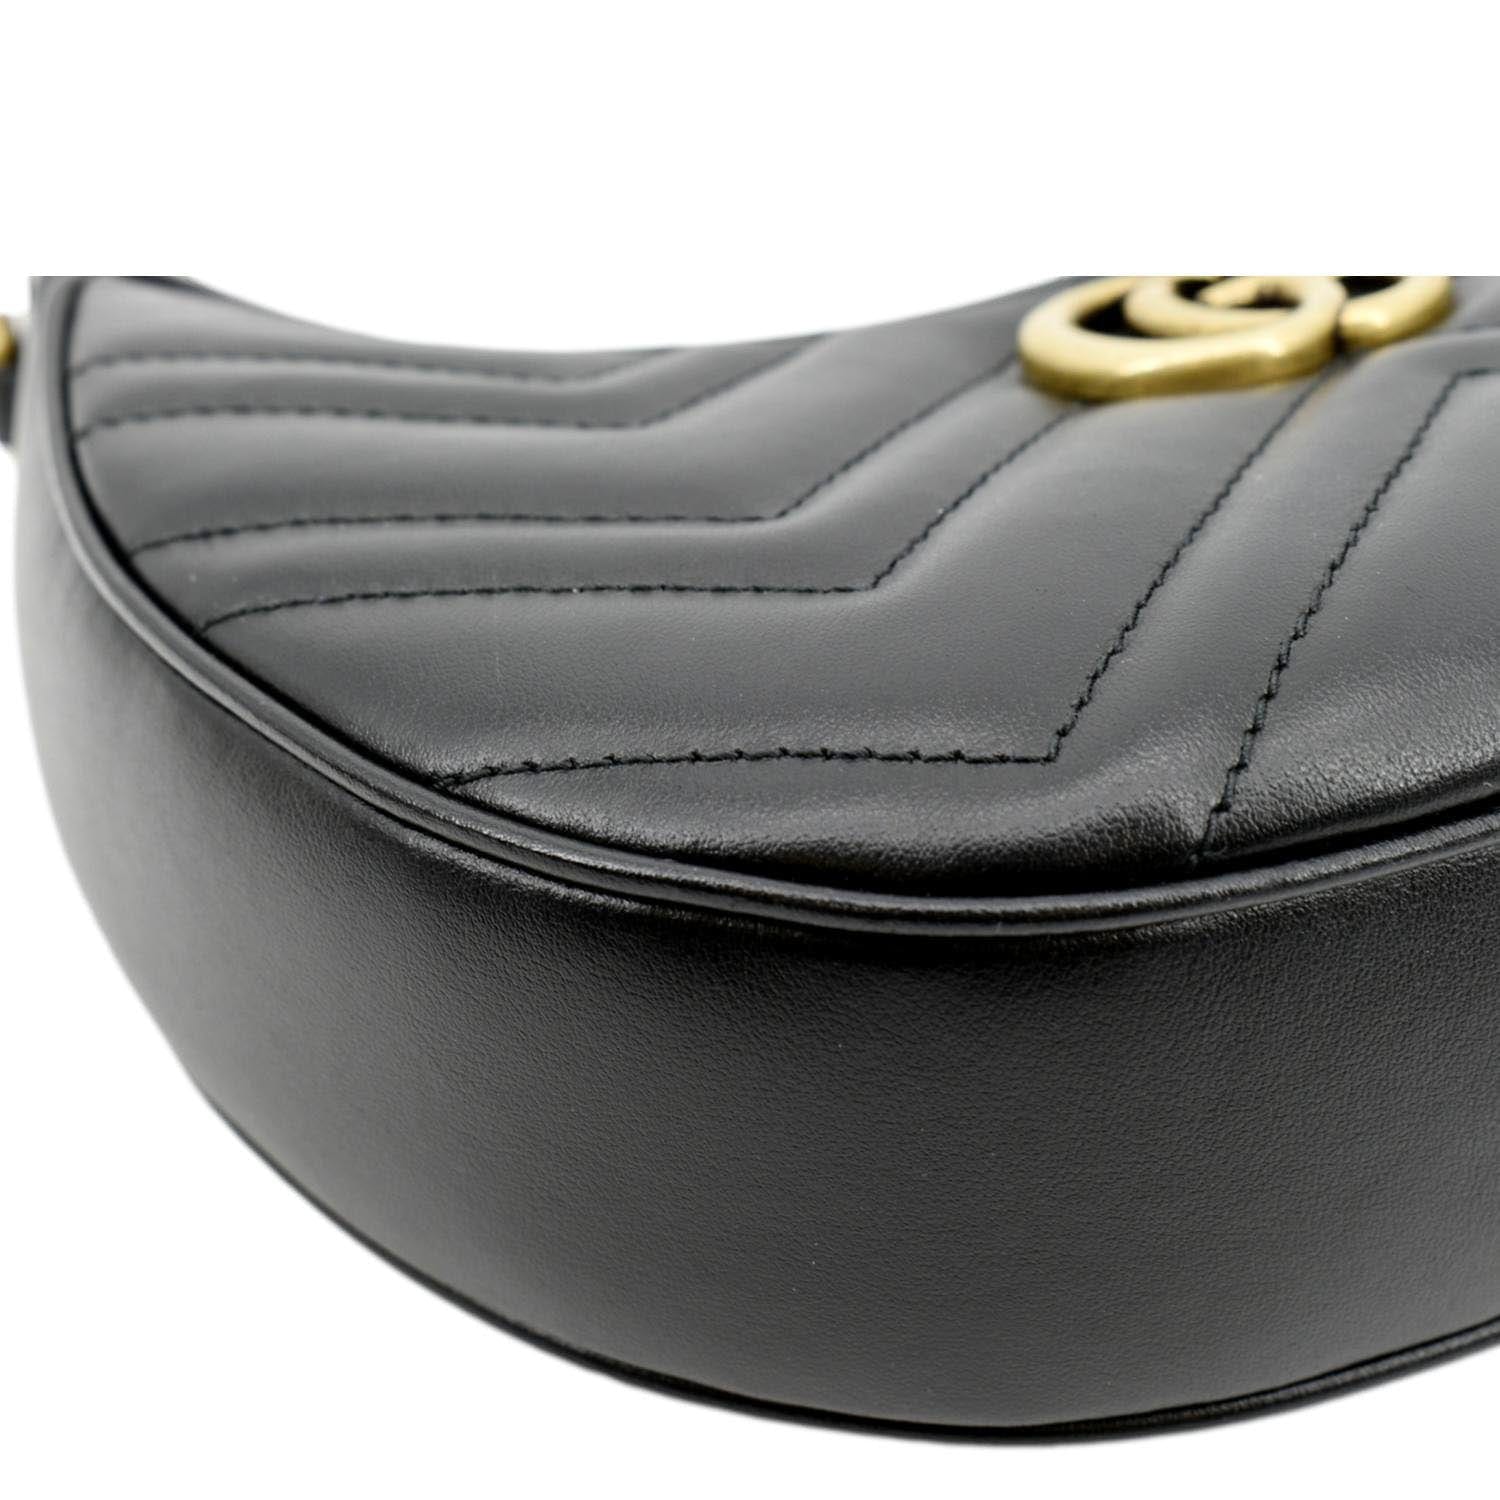 Gucci Half Moon Marmont Mini Leather Shoulder Bag in Black